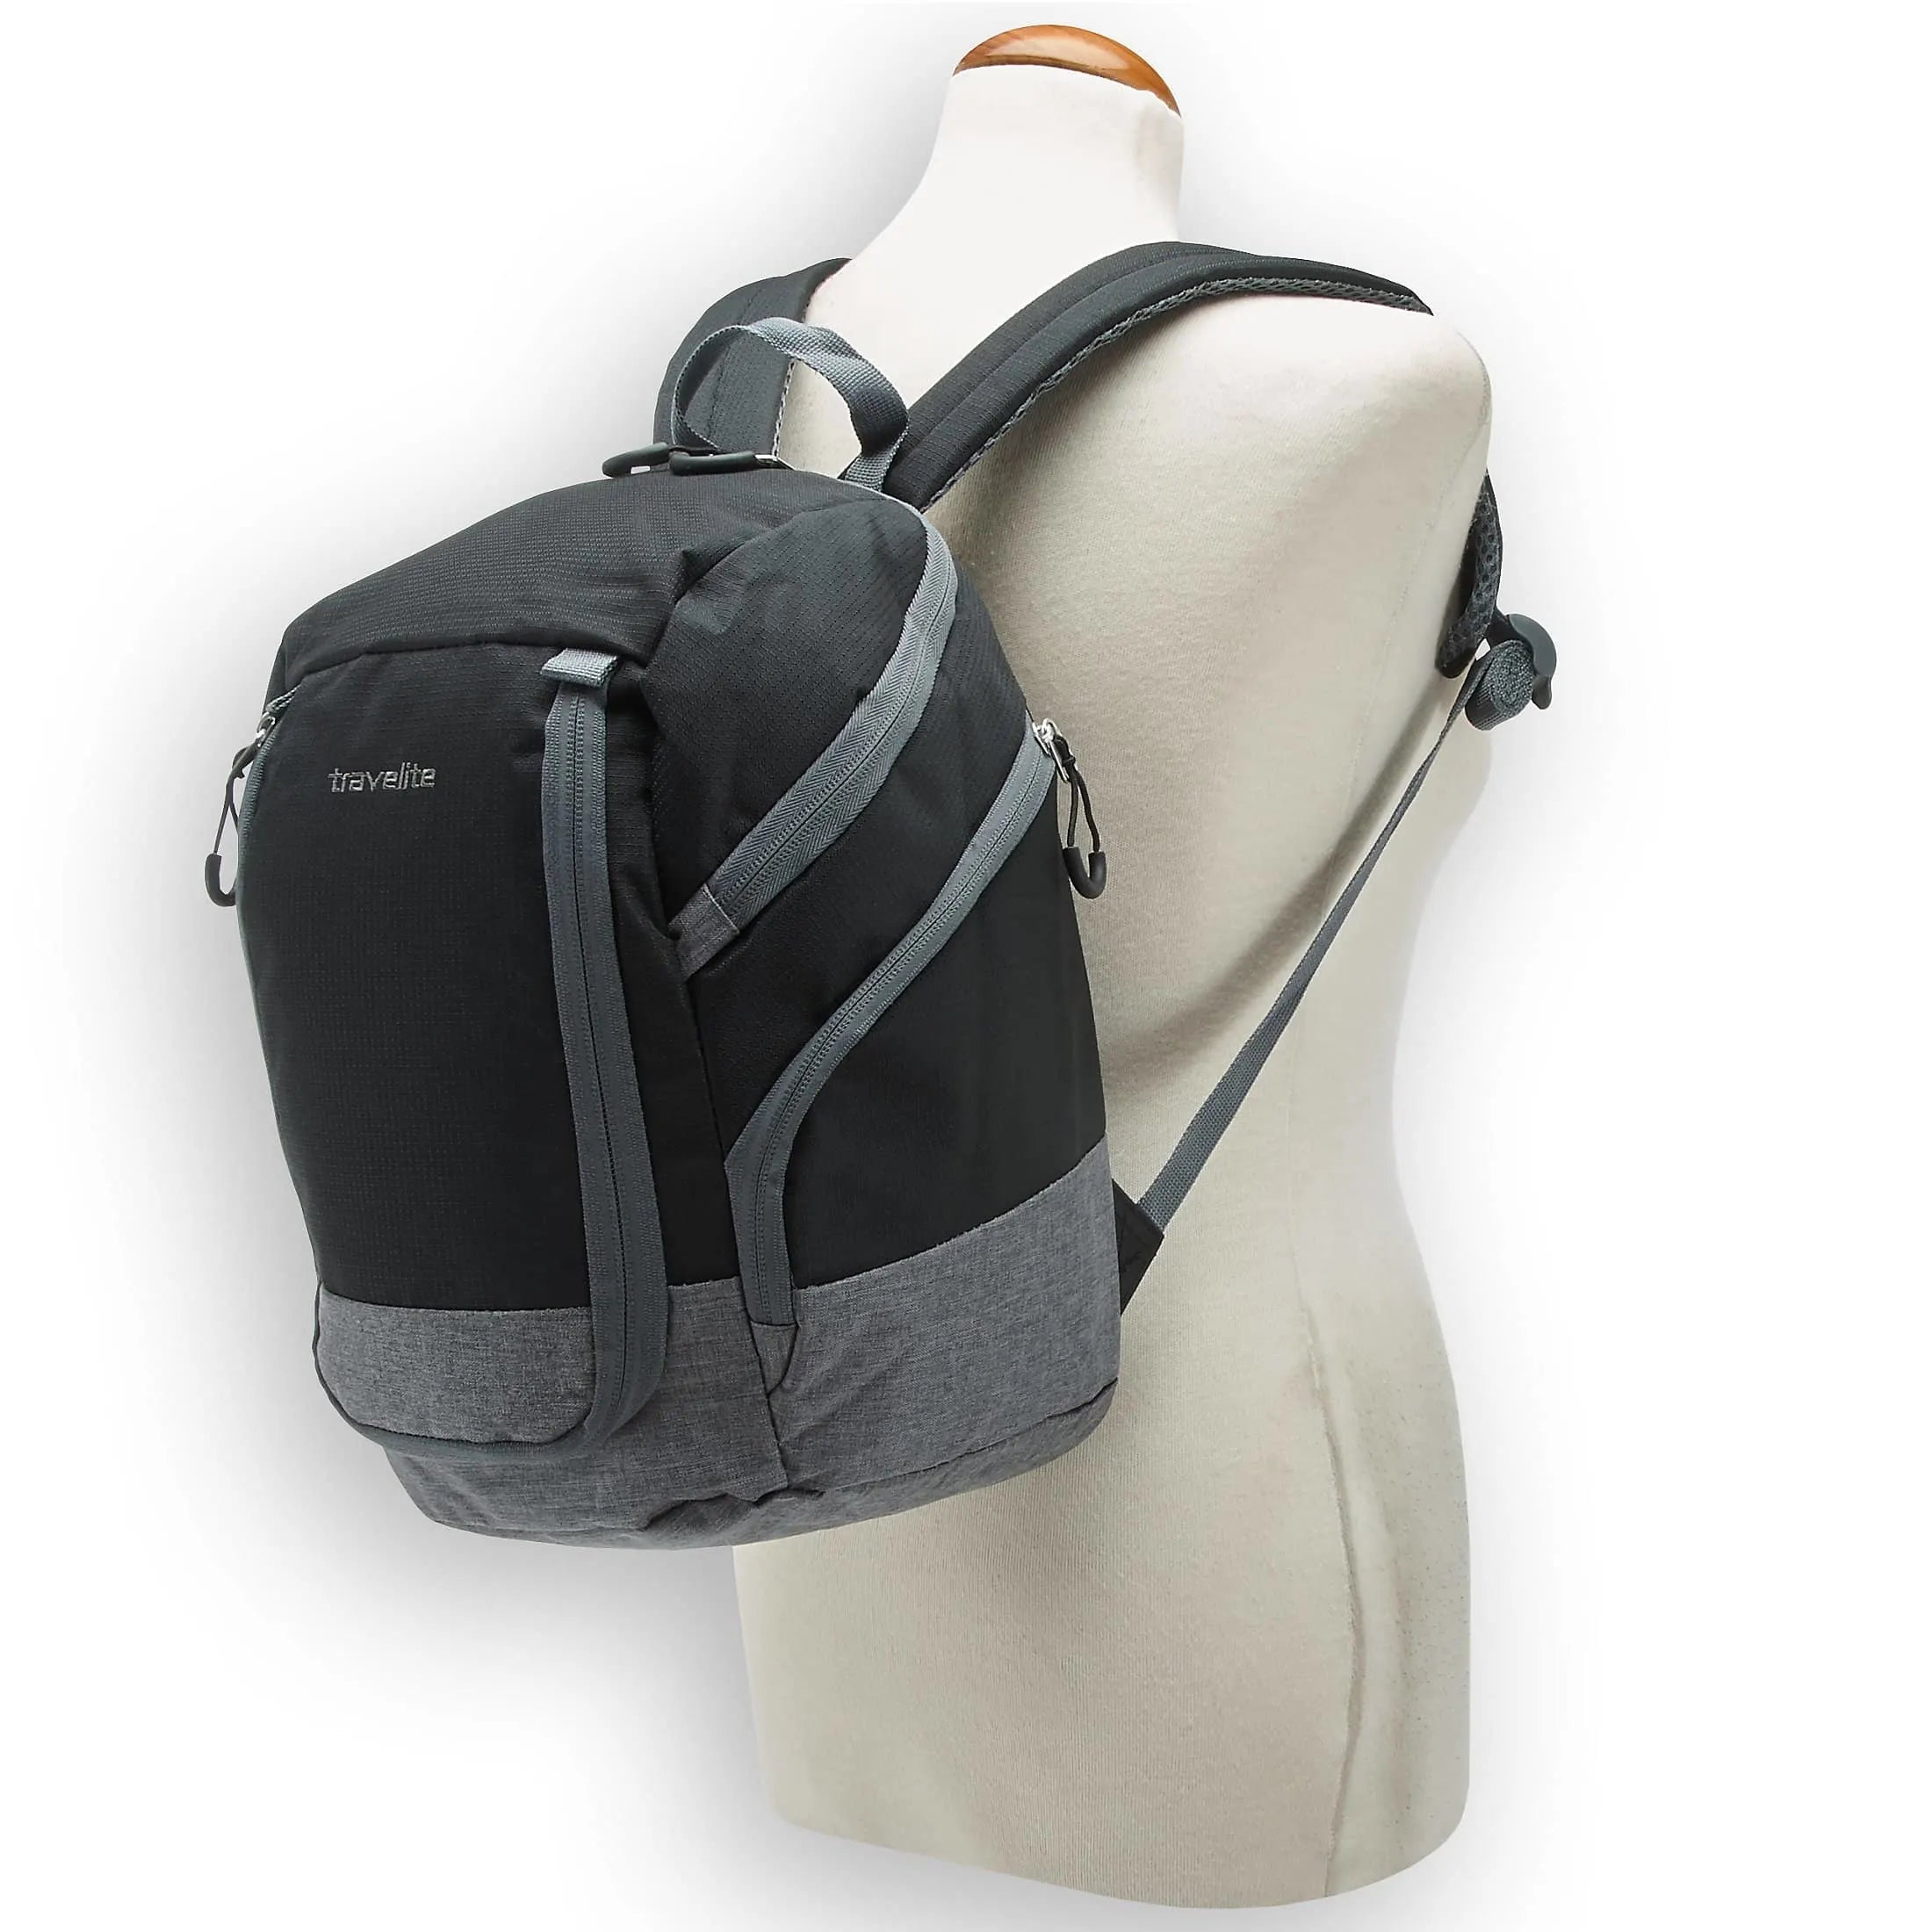 Travelite Basics sac à dos 35 cm - noir-gris